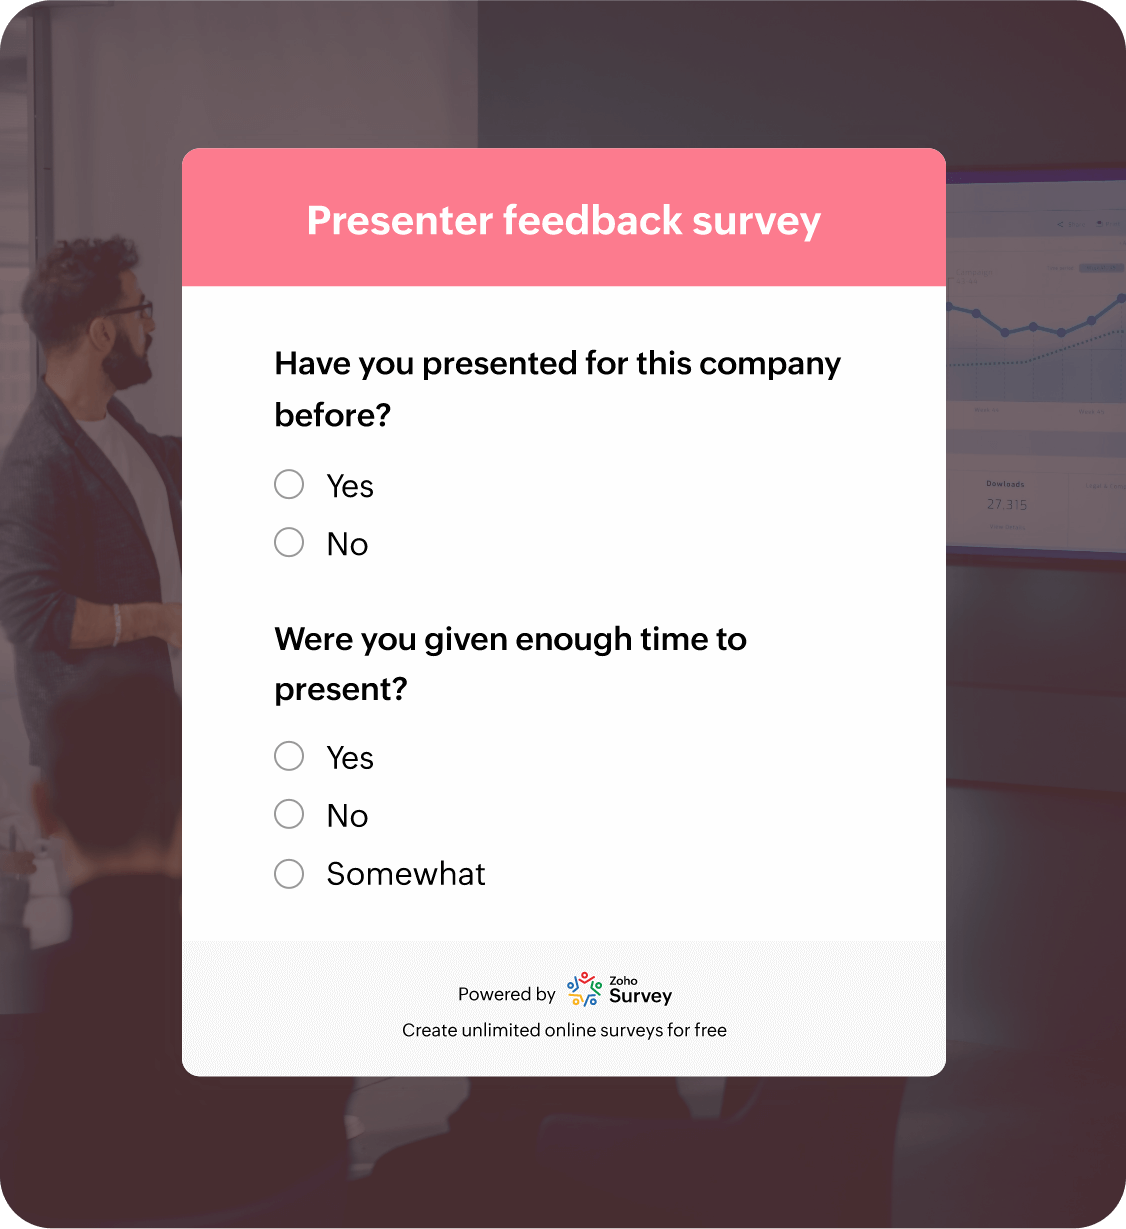 Presenter feedback survey questionnaire template